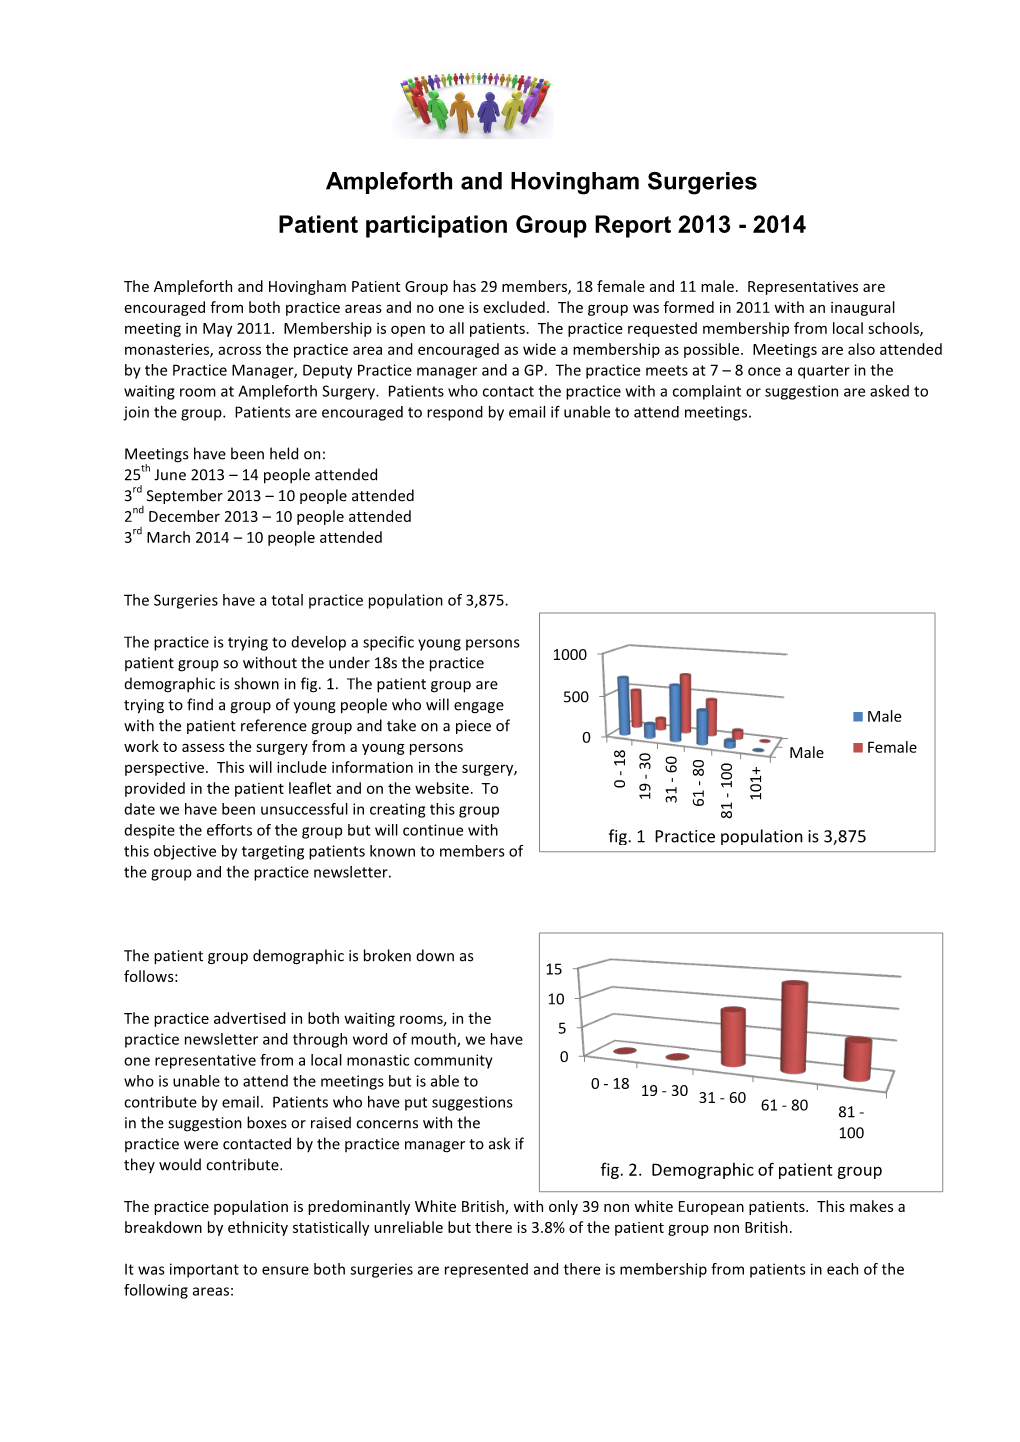 Ampleforth and Hovingham Surgeries Patient Participation Group Report 2013 - 2014